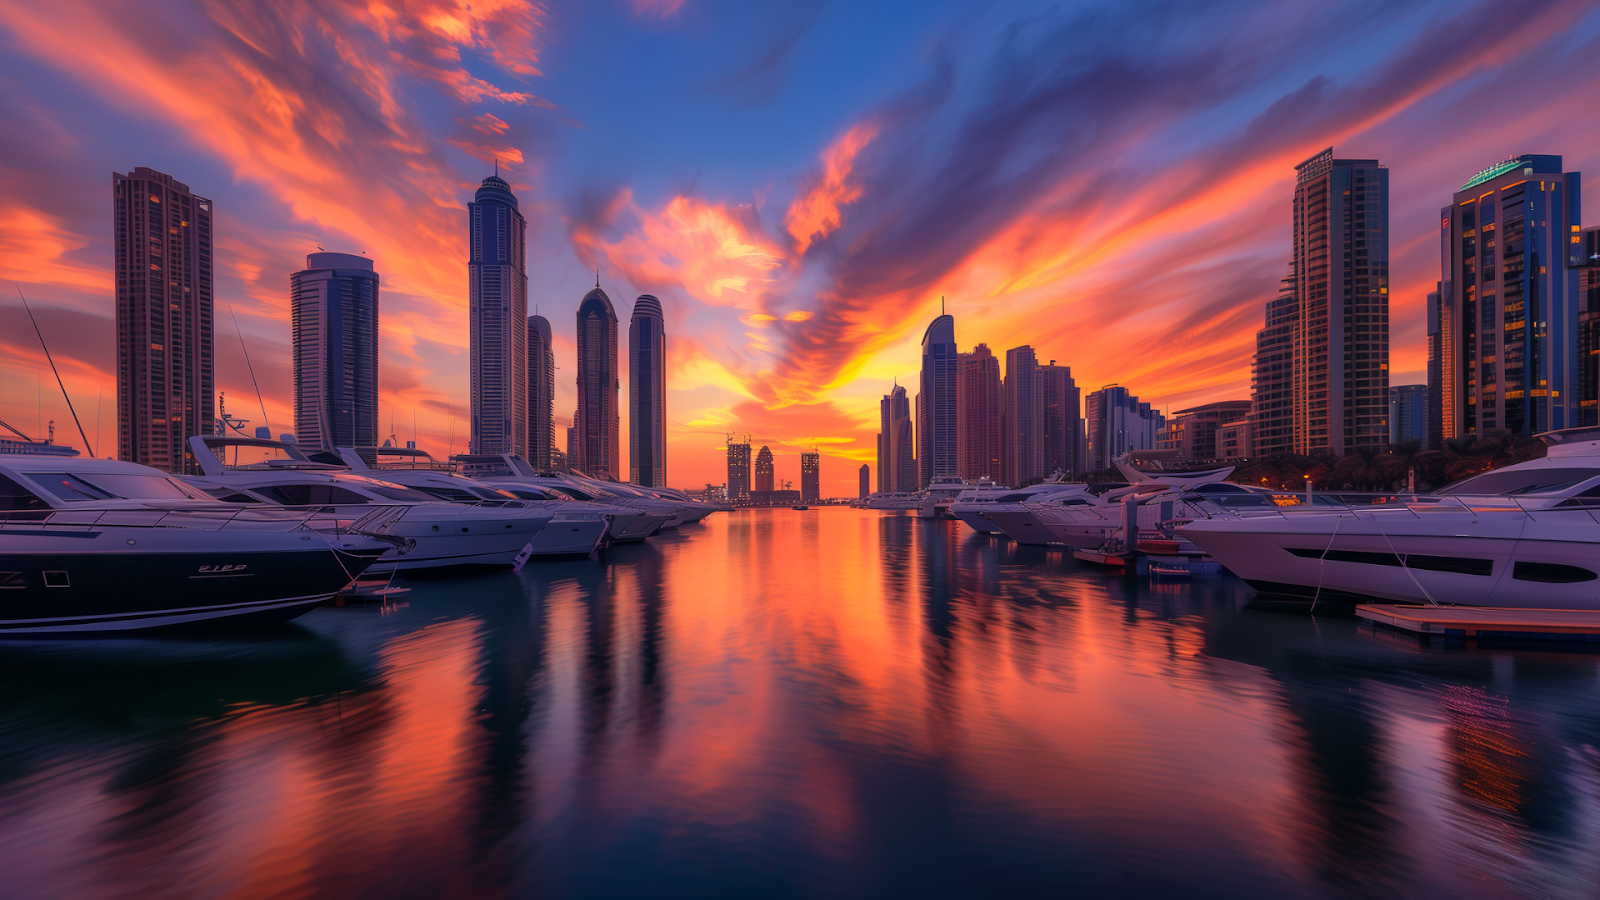 Sunset illuminating Dubai Marina, showcasing luxury yachts and the city's modern skyline.